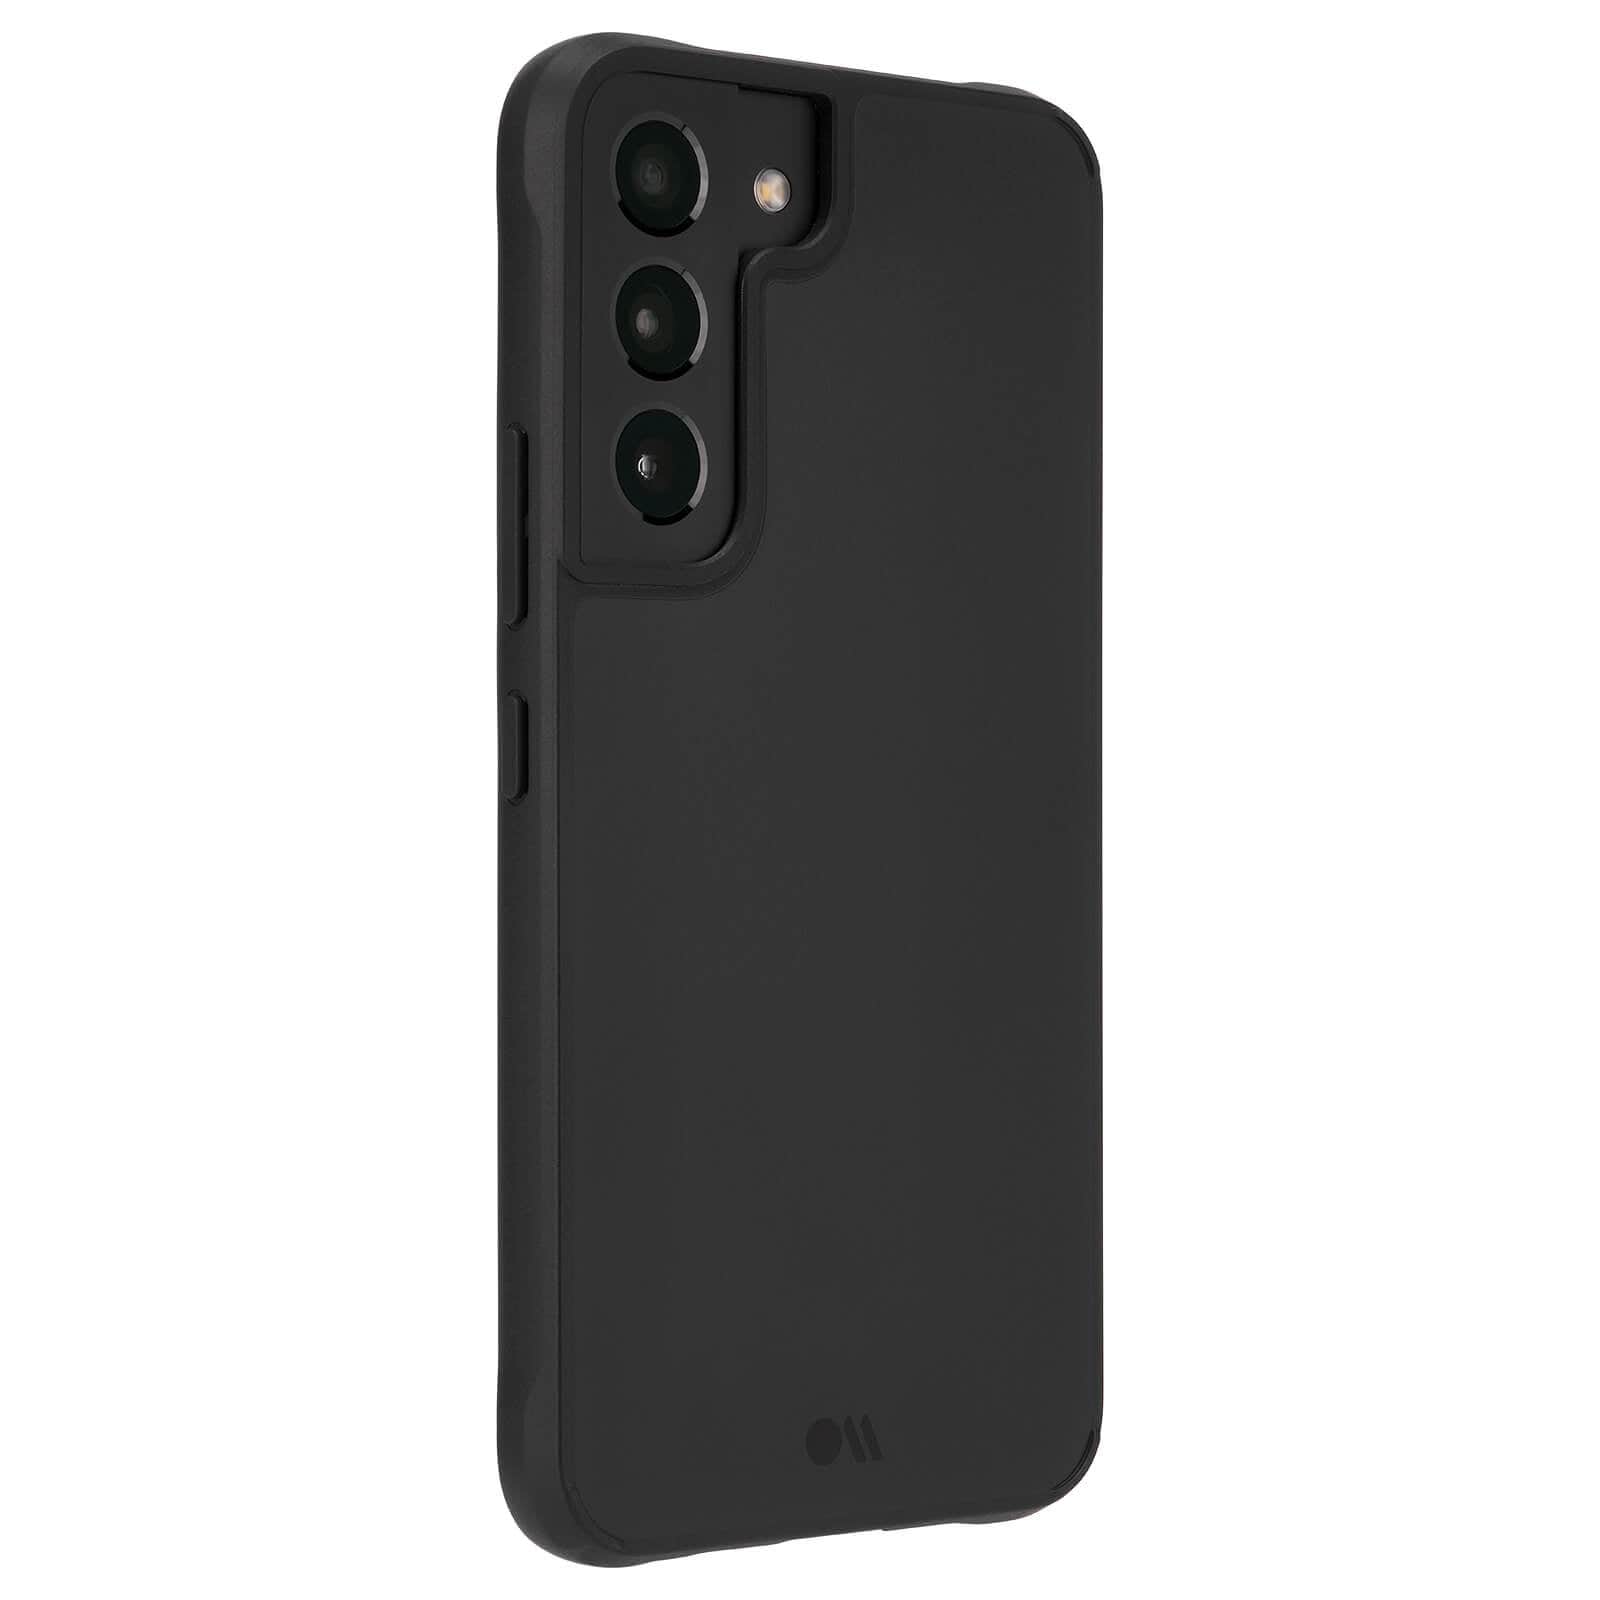 Tough protective black case for Galaxy S22 device. color::Black